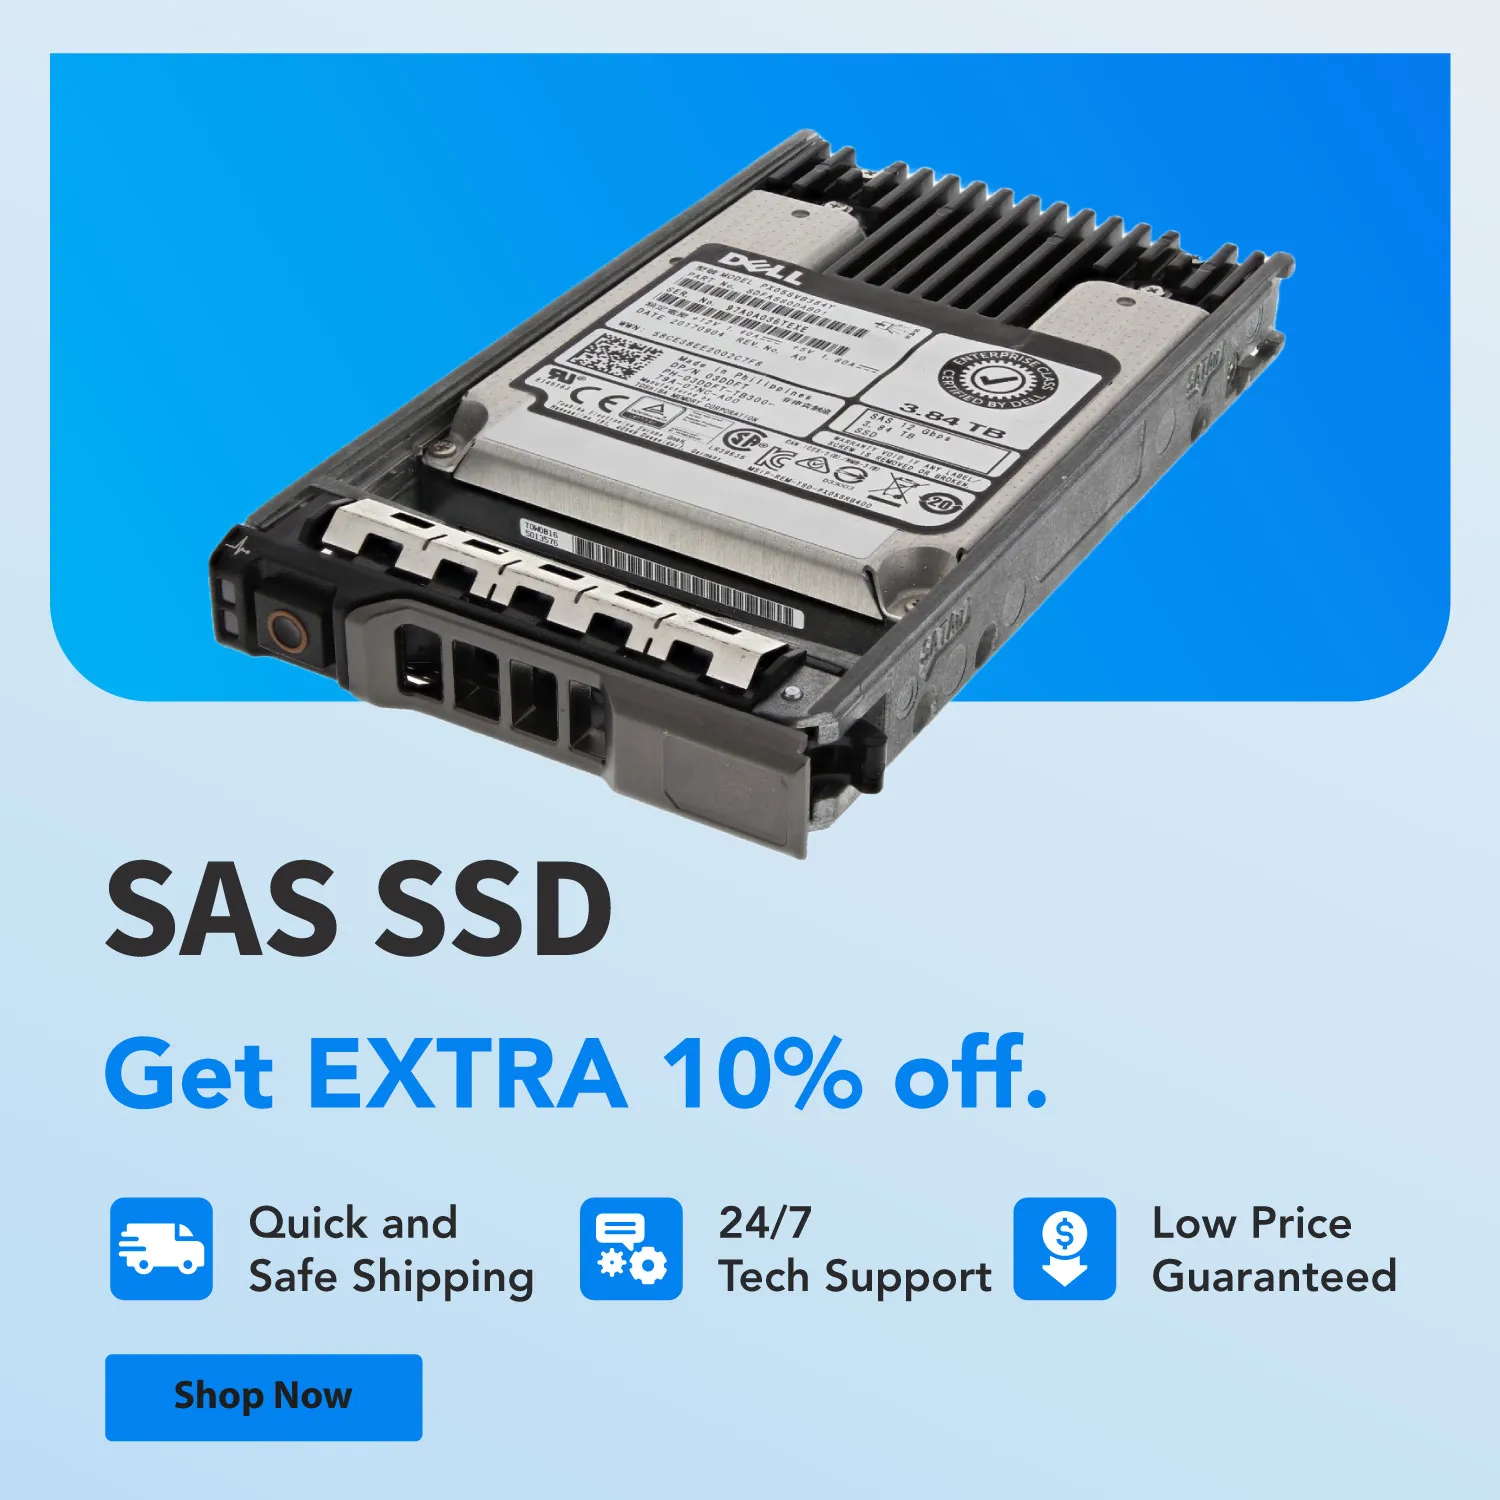 SAS SSD